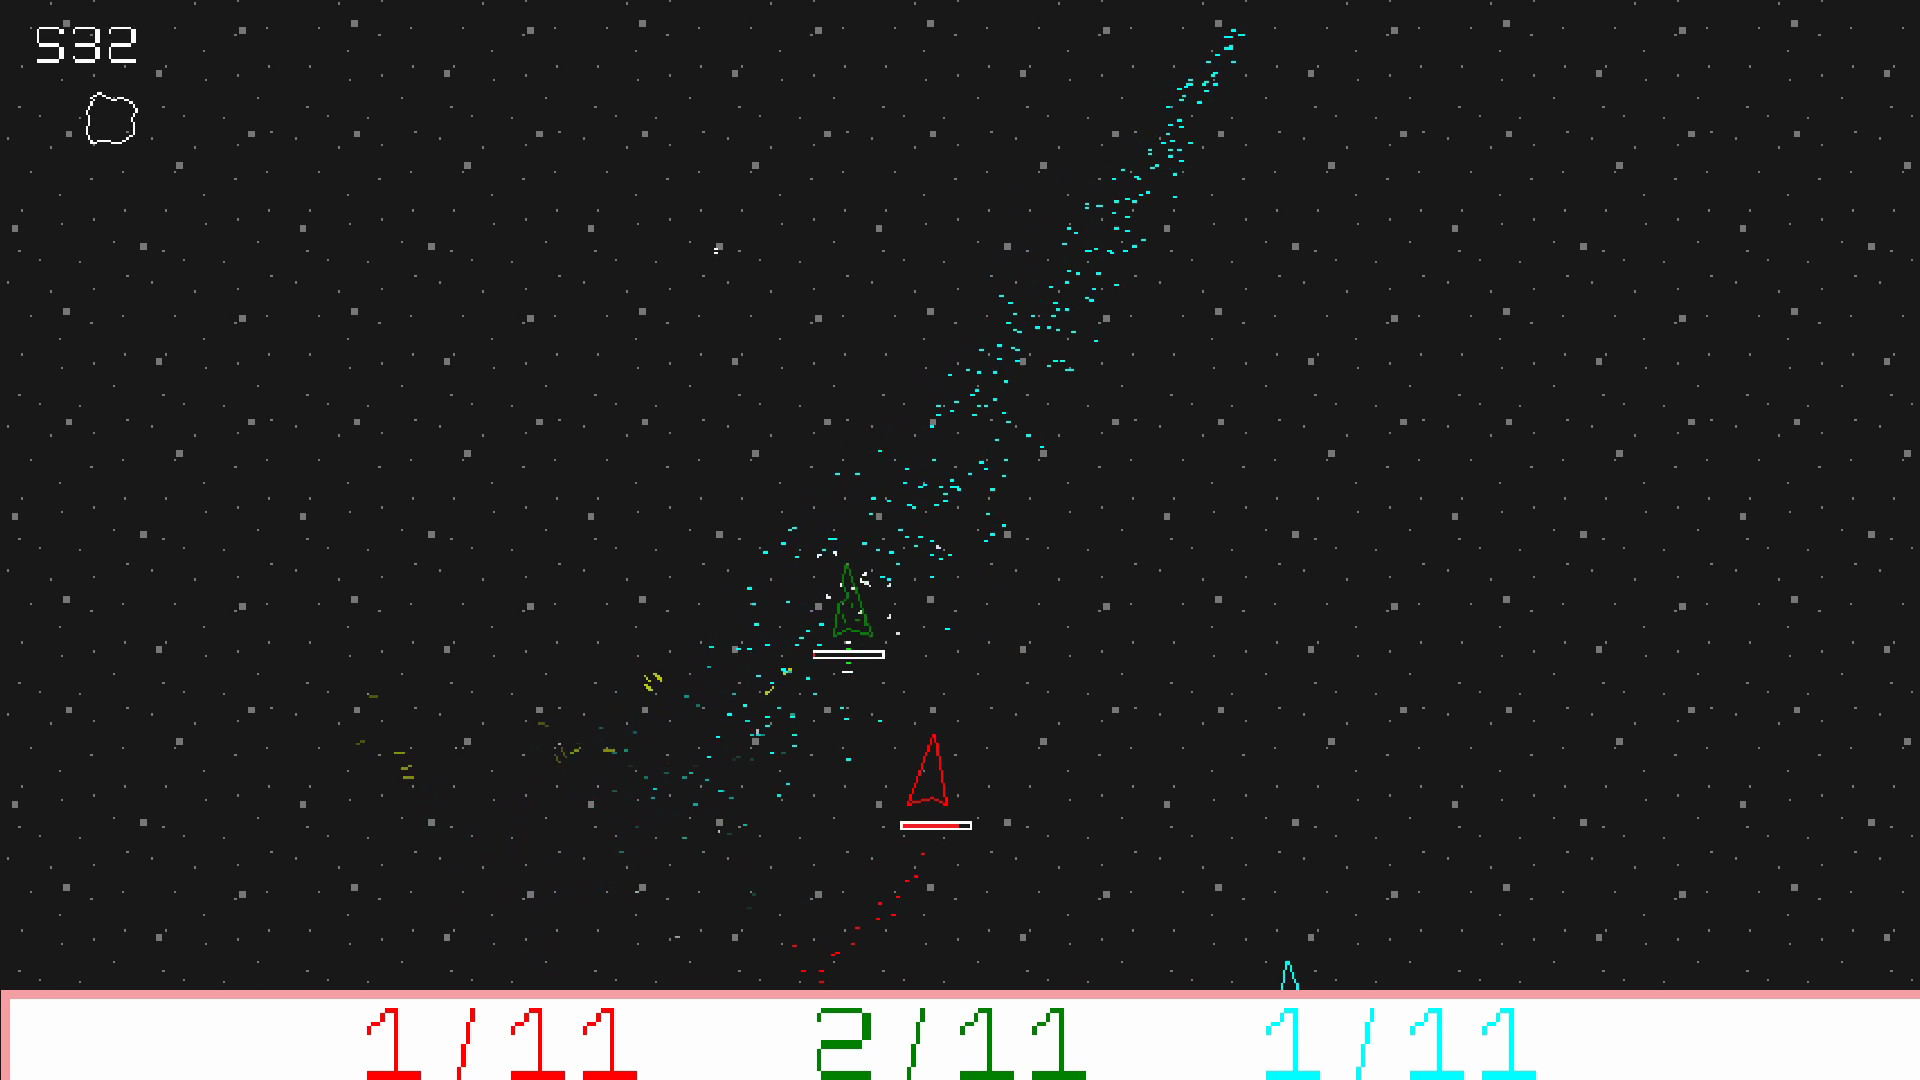 Untitled Space Game screenshot